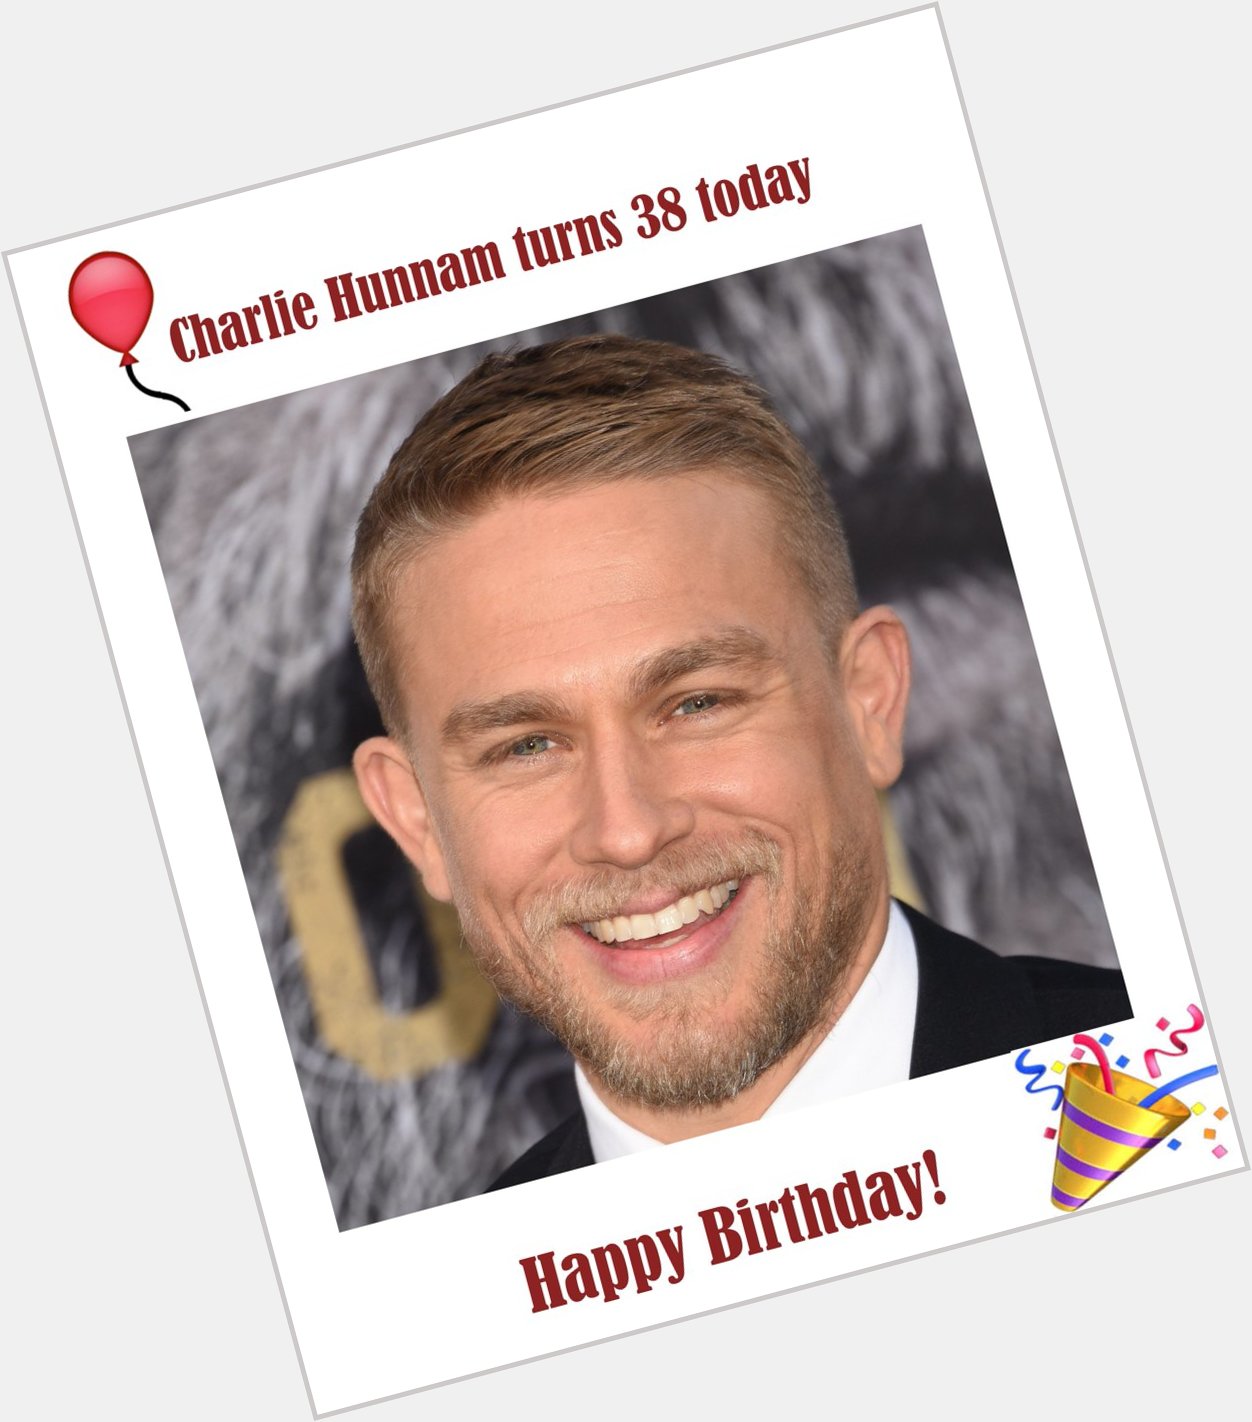 Happy birthday to Charlie Hunnam! 